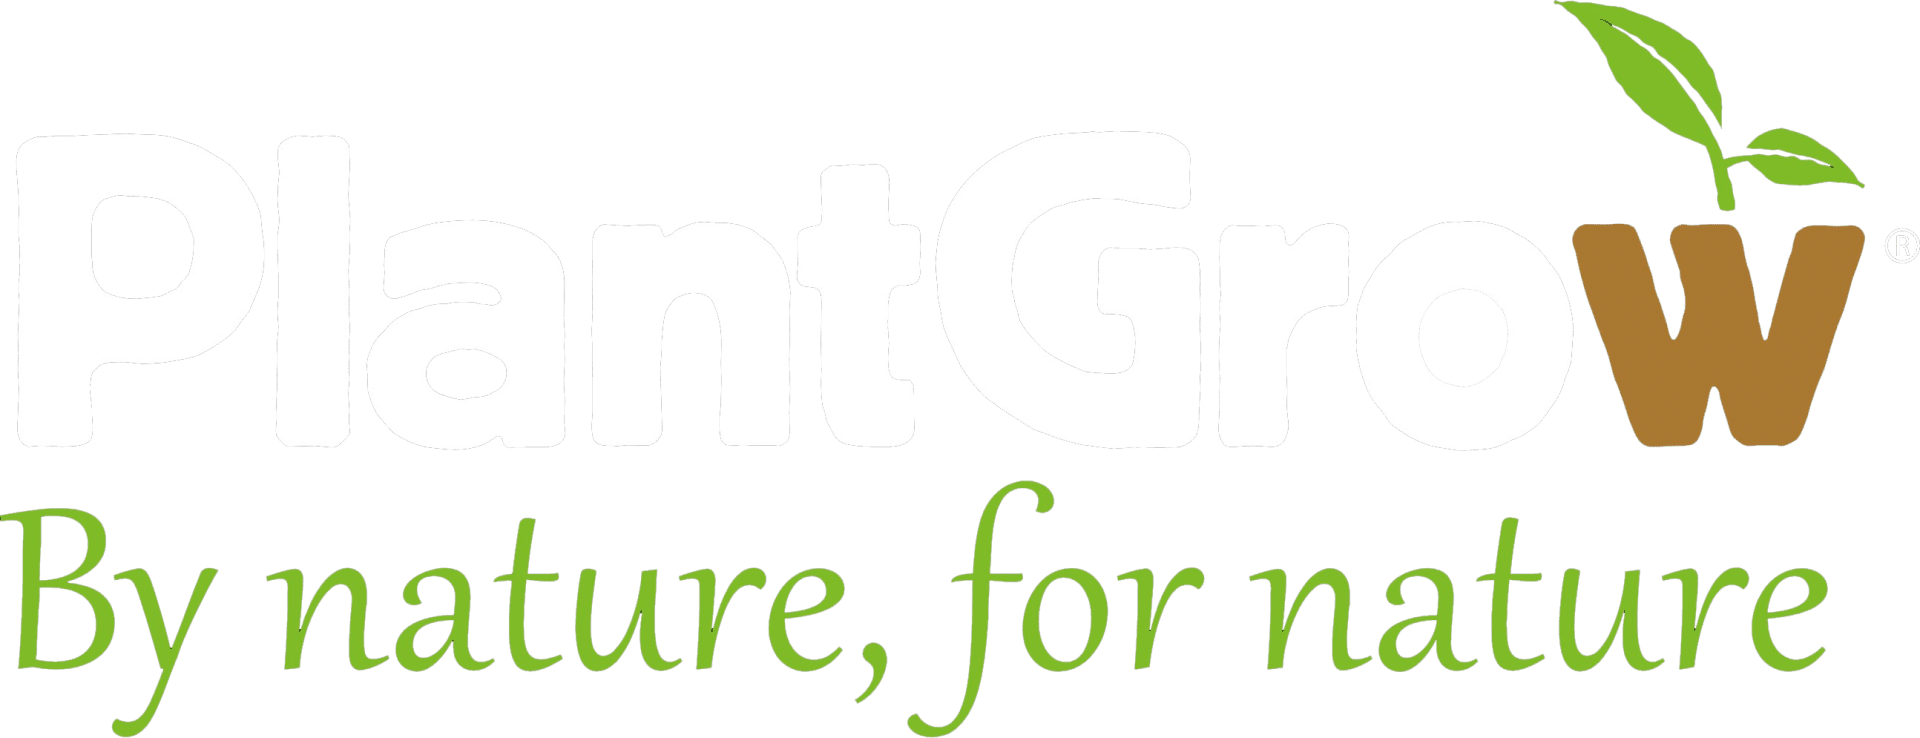 Plantgrow logo